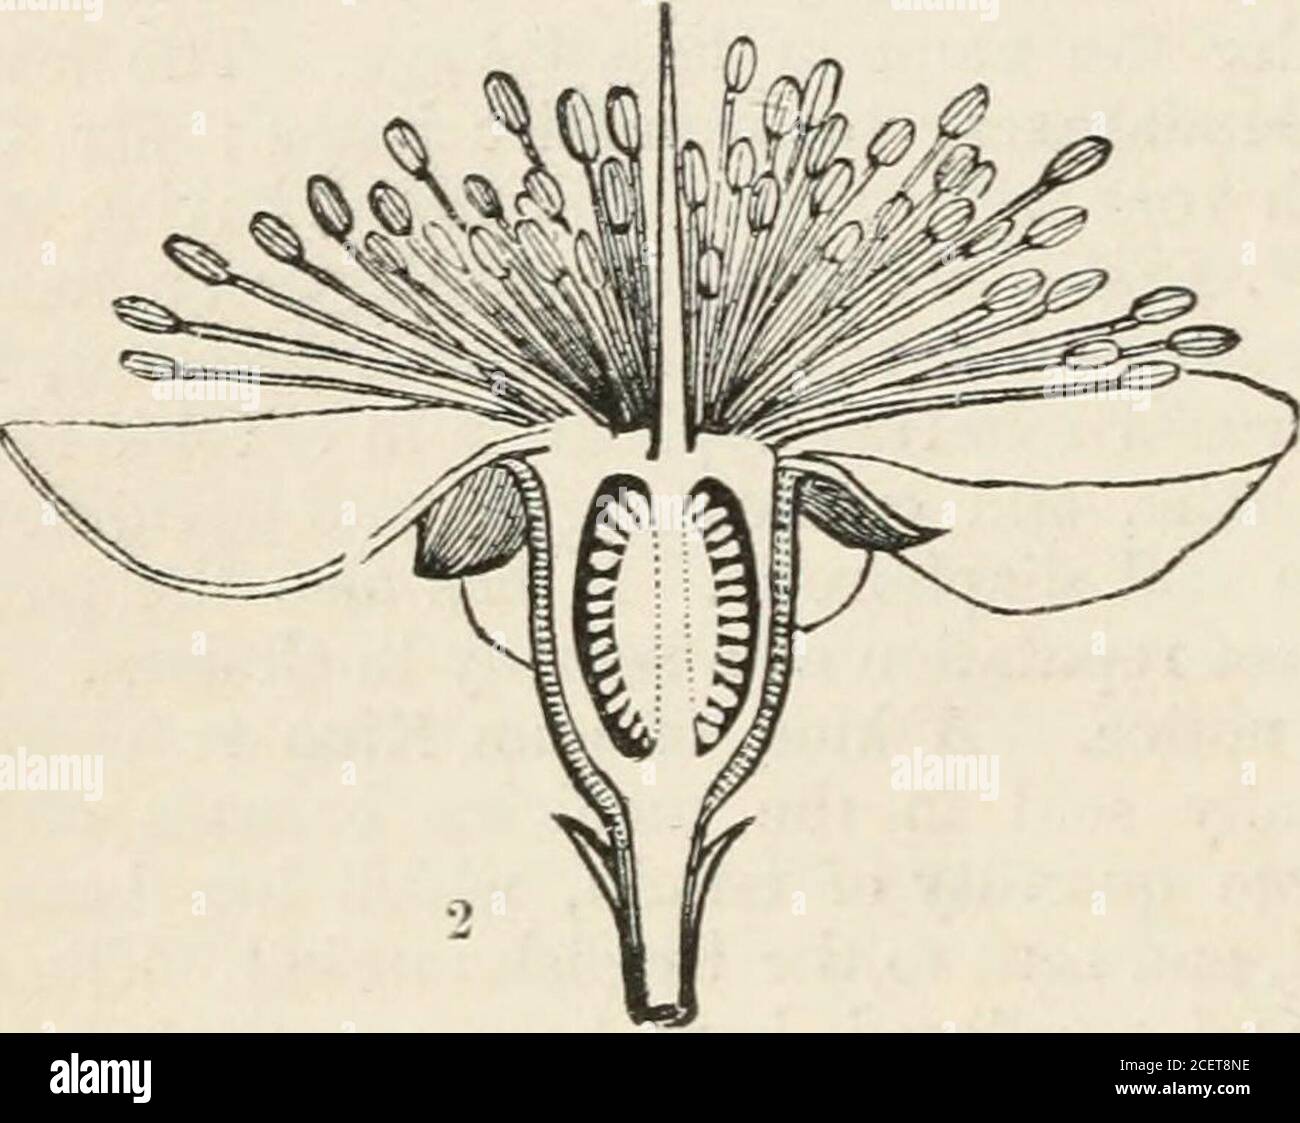 . The vegetable kingdom : or, The structure, classification, and uses of plants, illustrated upon the natural system. spermum, Forst. B 738 Fabricia, Gcertn.Baeckea, Linn. Imbricaria, Smith. Jungia, Gasrtn. Mollia, Gmel. Cedrela, Lour.Babingtonia, Lindl. II. Mybtb^.—Baccate. Sonneratia, Liiin. f.AtiUetia, GSrtn.Pagapate, Sonner.Blatti, Rheed. MYRTACE^. Nelitris, Gdrtn. Decaspermutn, Forst.Campomanesia, R.et P.Psidium, Linn. Guaiava, Touruef. Biirchardia, Neck.Rhodamnia, Jack. Monoxora, Wight ?Glaphyria, Jack,Vimenia, Lindl.Myrtus, Tournef. Leiicomyrtus, DC. Myrtillus, Endl. Ltantria, Soland. J Stock Photo